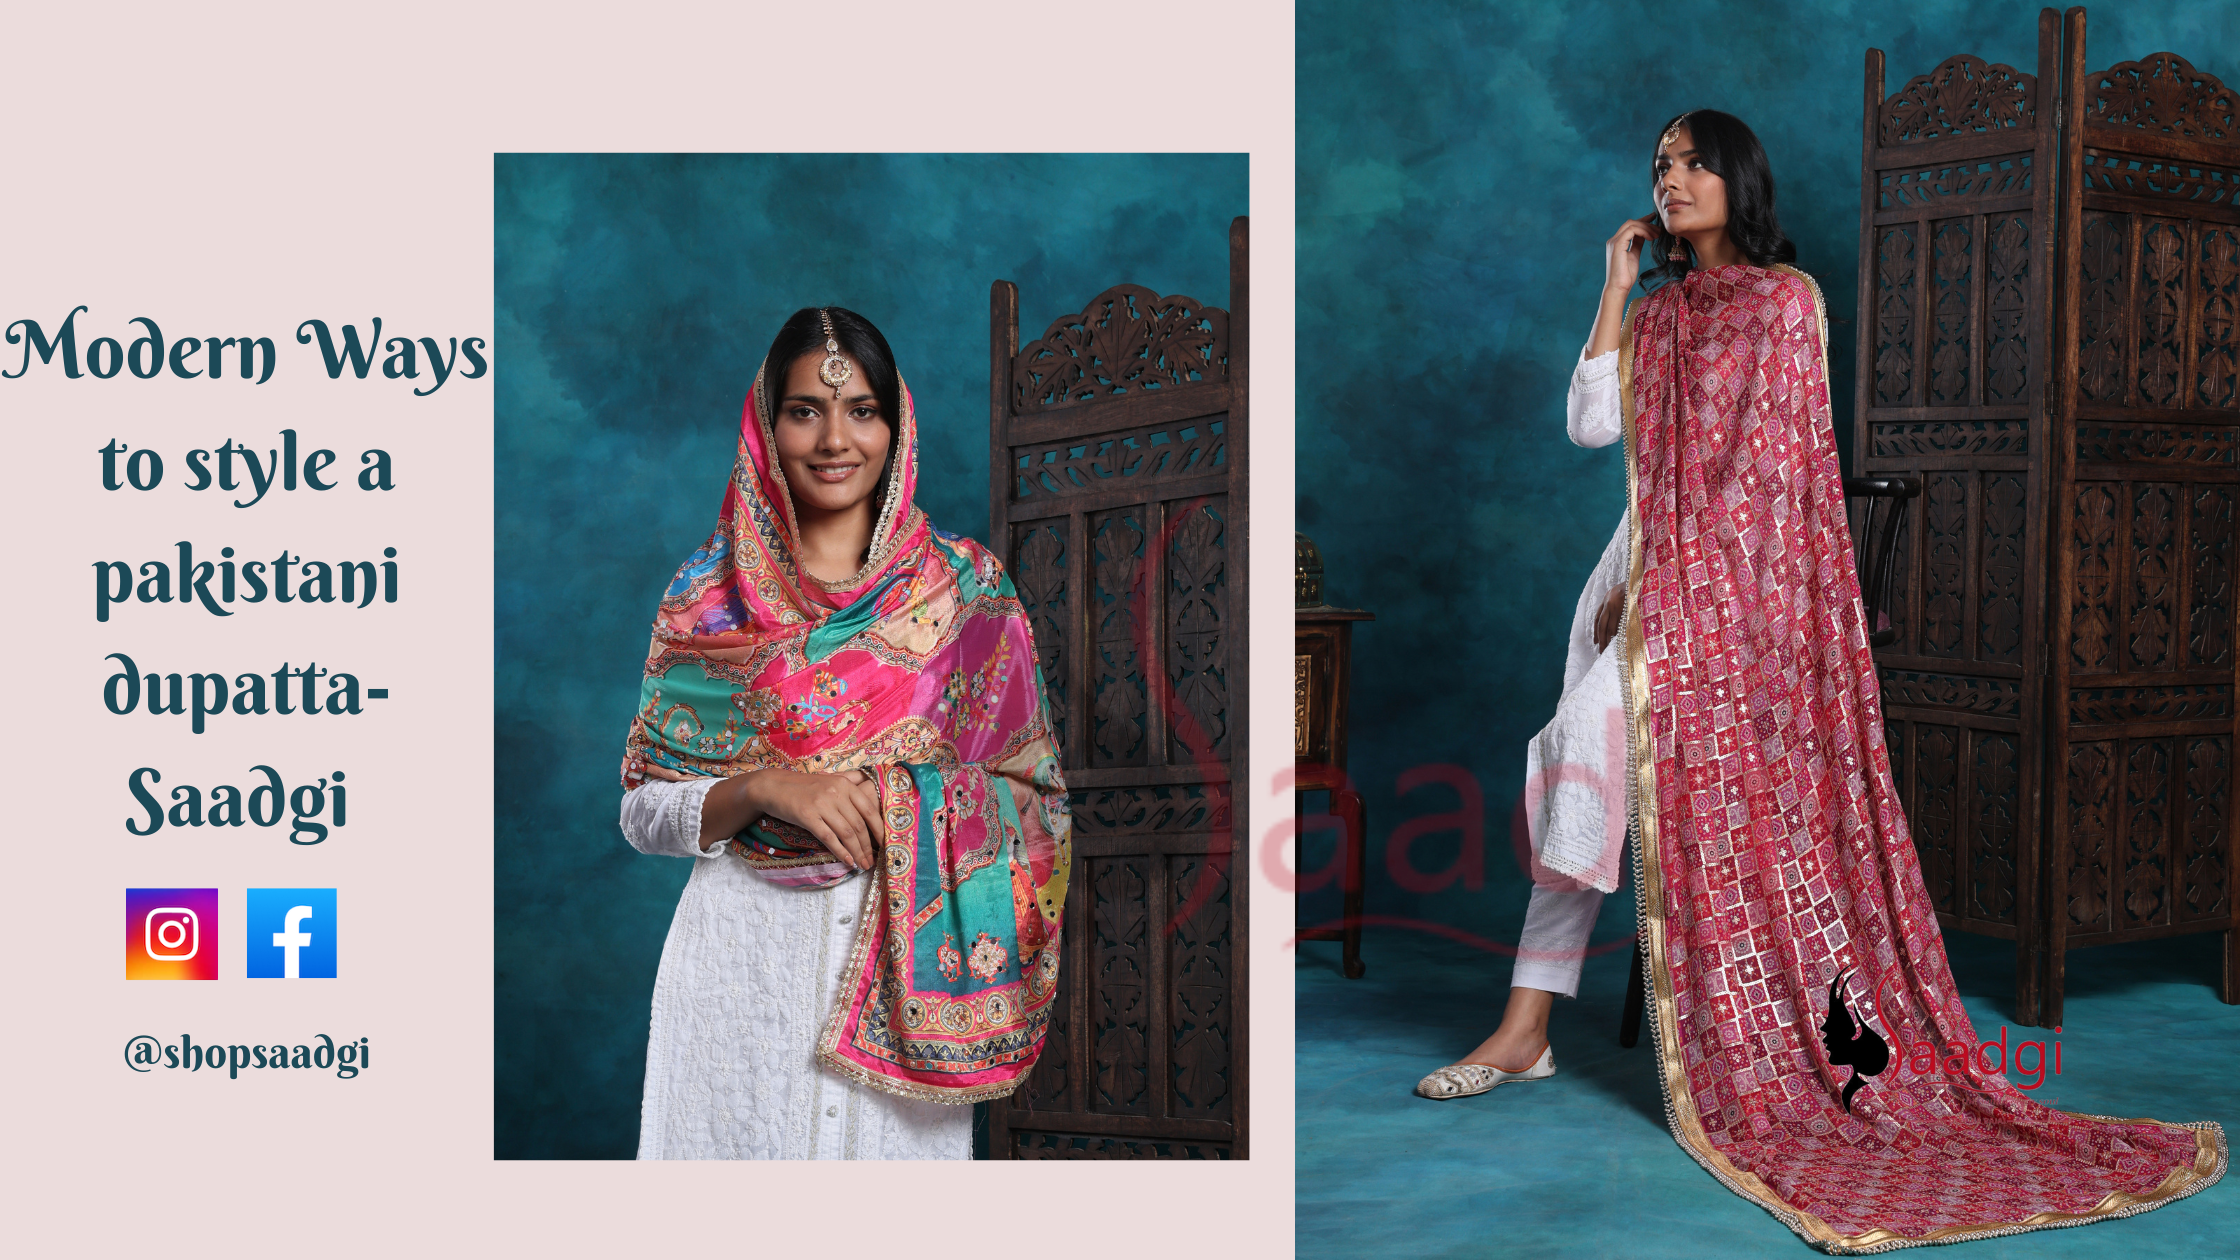 Modern Ways to style a pakistani dupatta- Saadgi